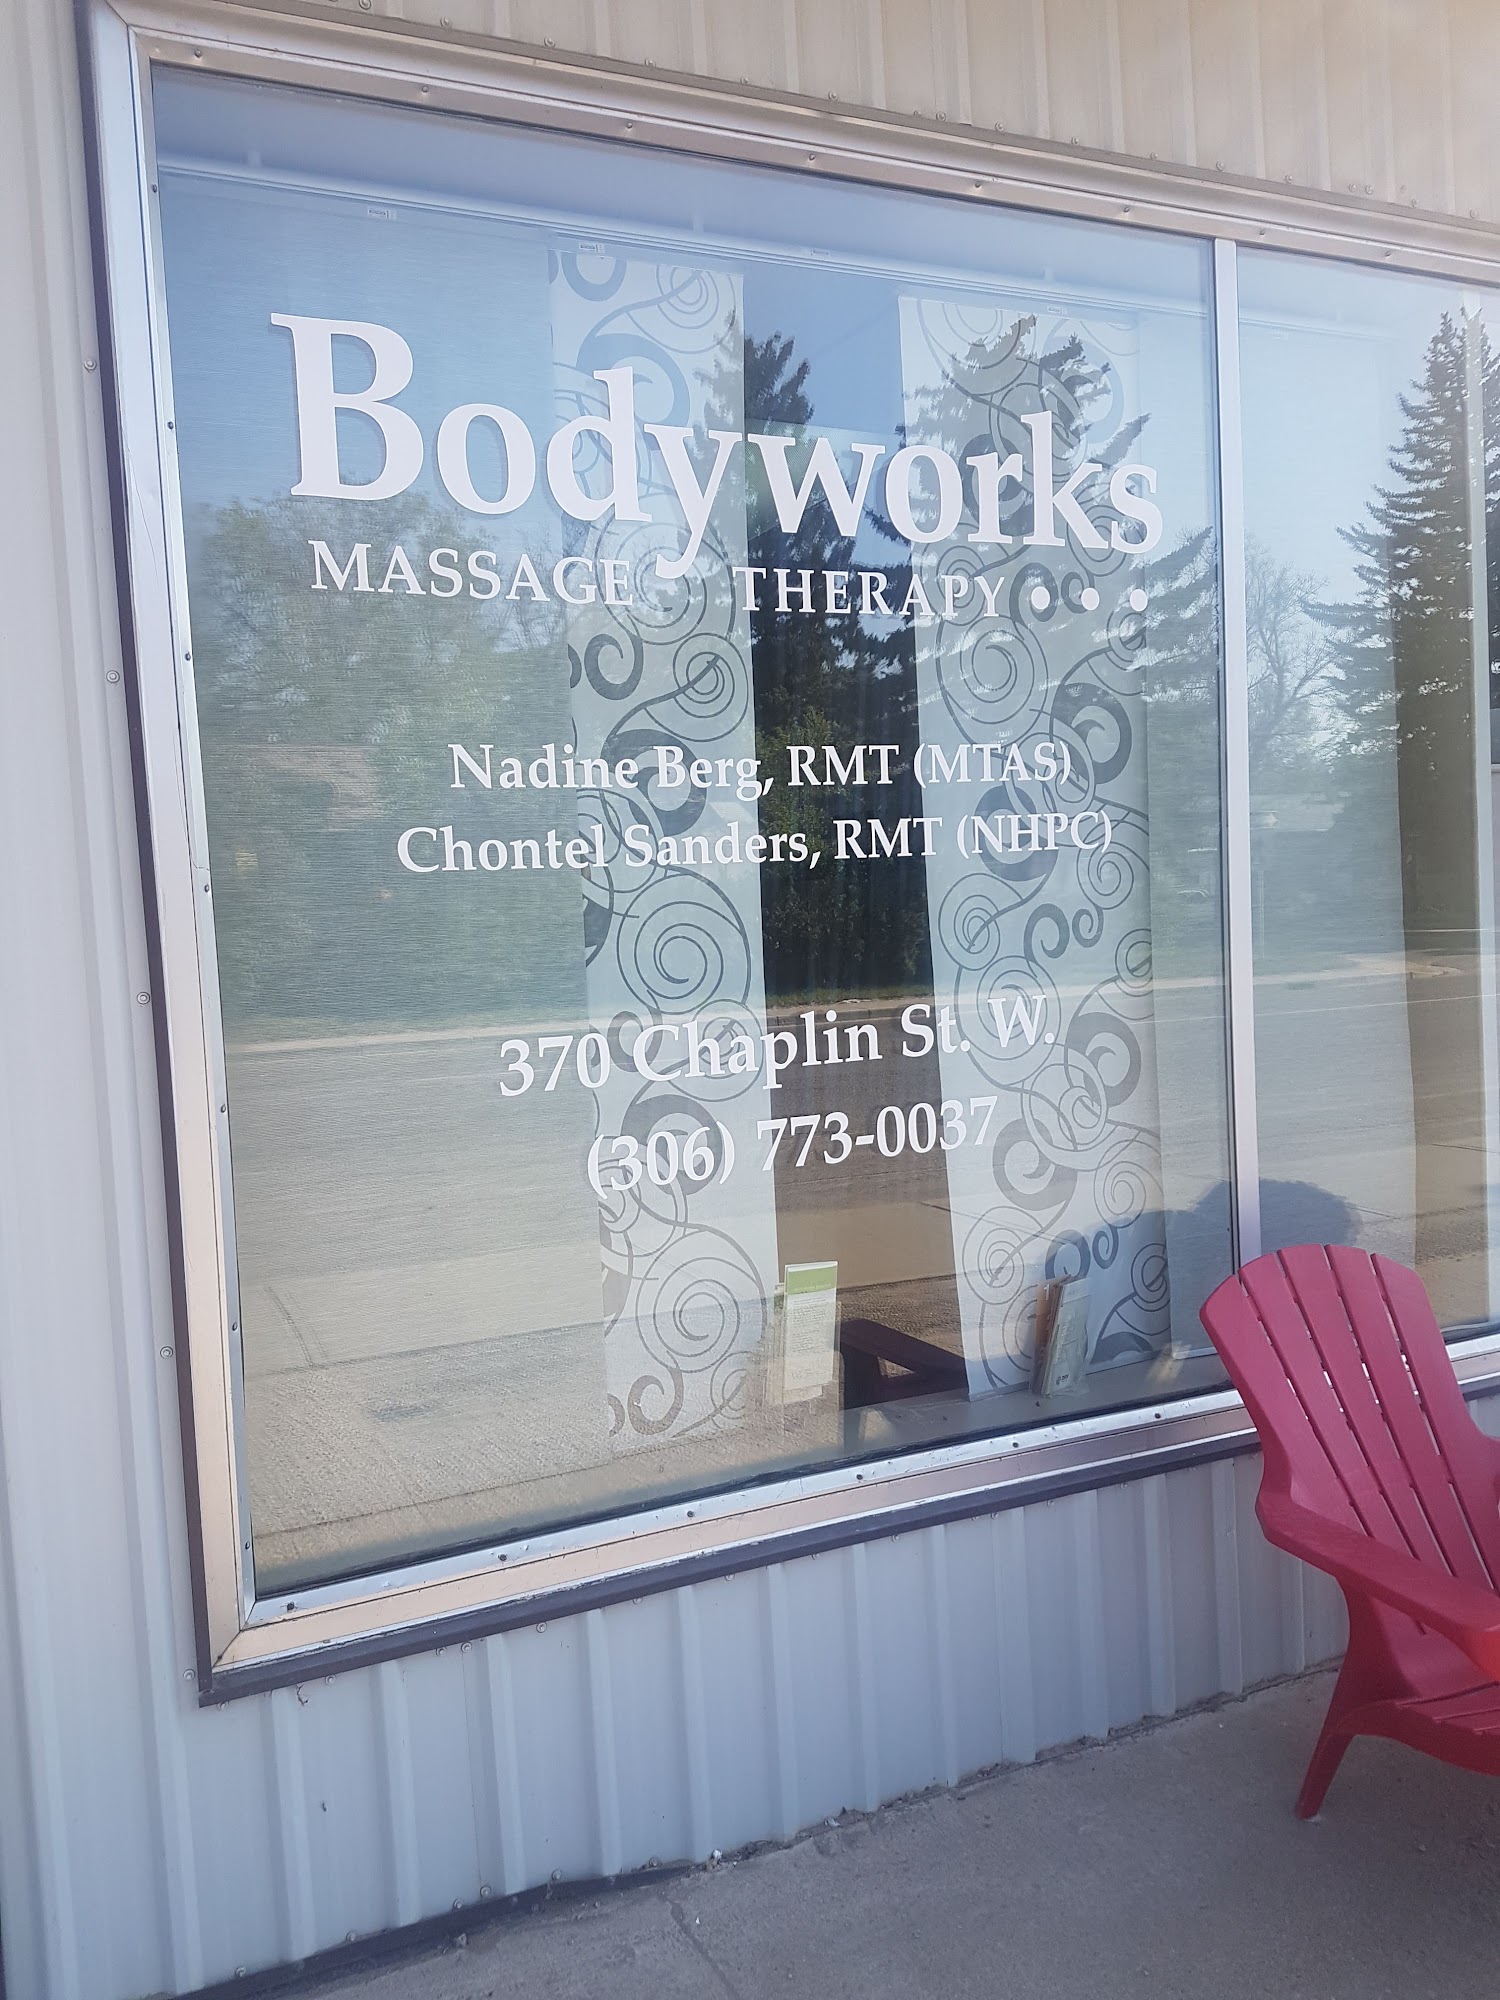 Bodyworks Massage Therapy 370 Chaplin St W, Swift Current Saskatchewan S9H 0E9